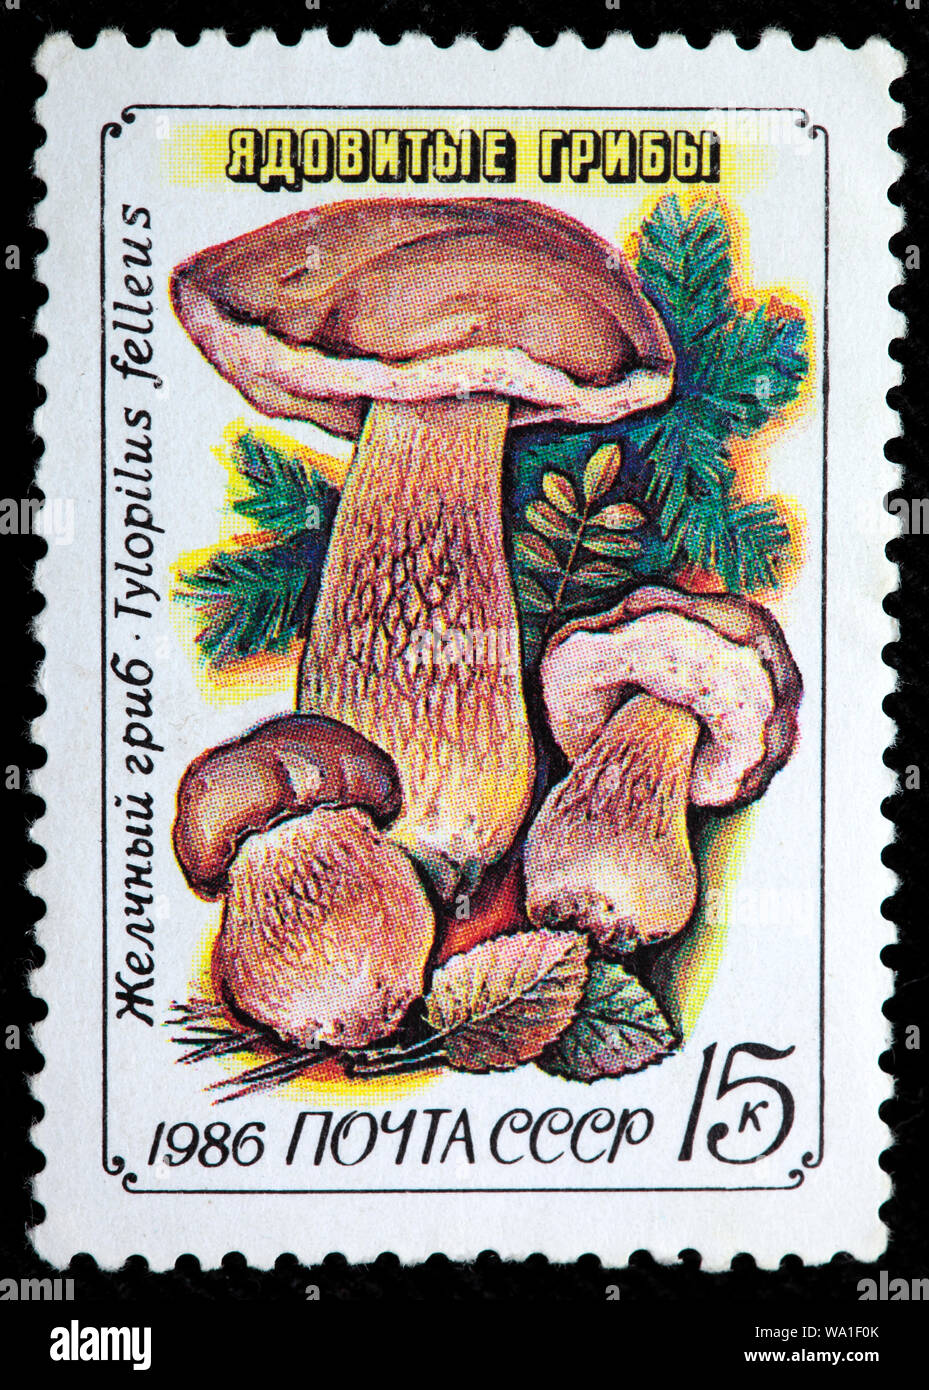 Tylopilus felleus, Bitter bollete, poisonous mushroom, postage stamp, Russia, USSR, 1986 Stock Photo